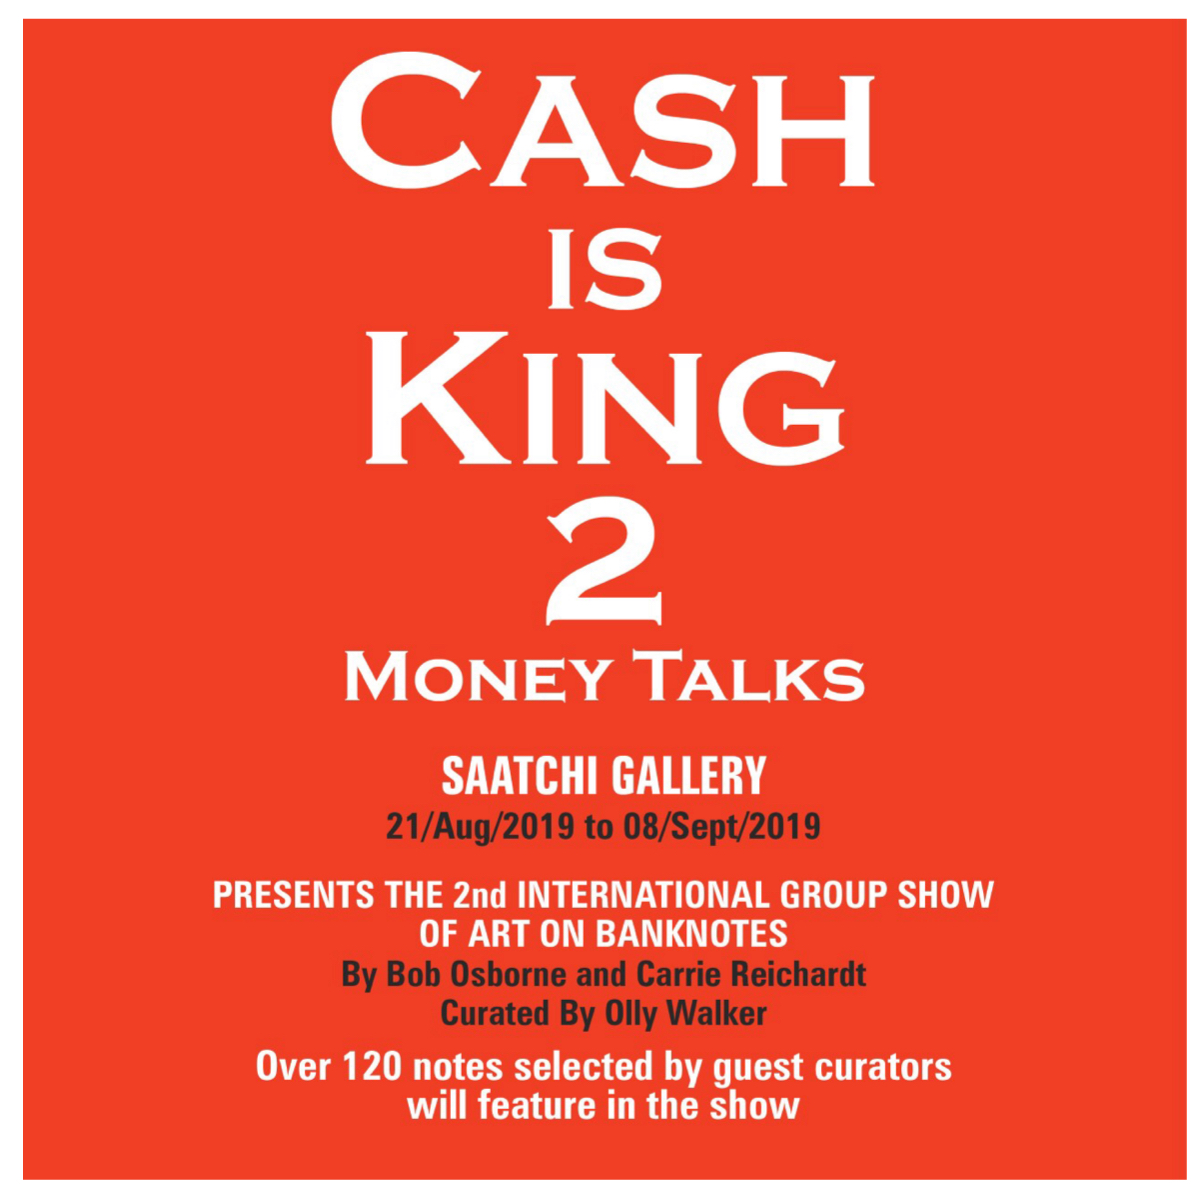 Cash is King. King talk